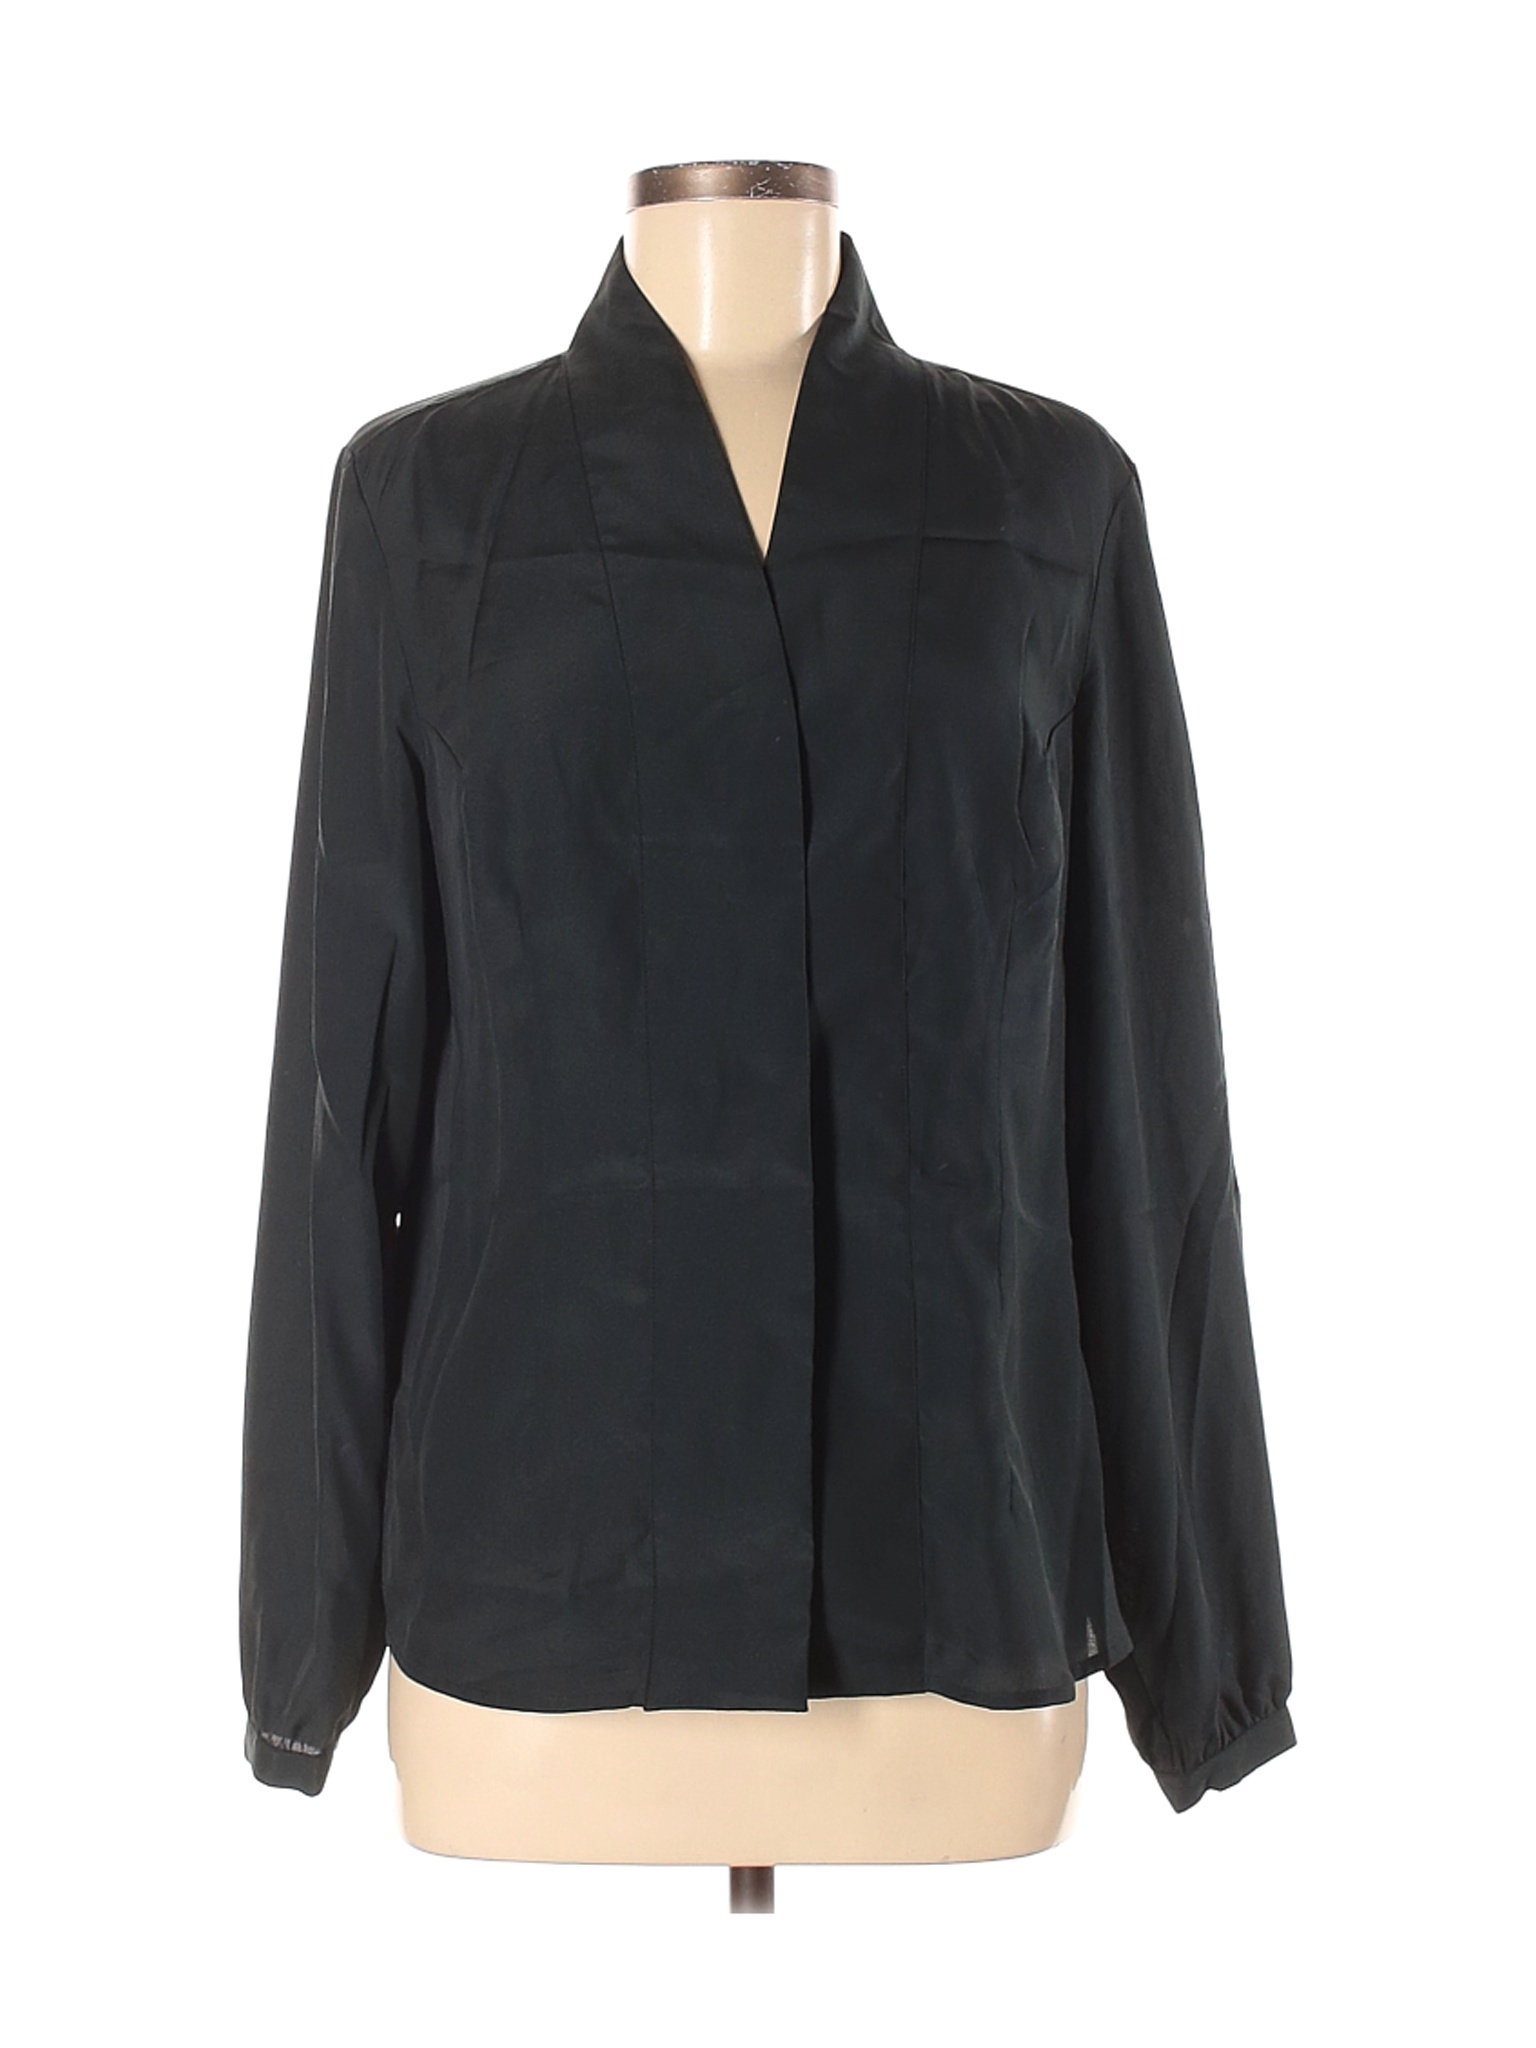 Soft Surroundings Women Black Long Sleeve Blouse M | eBay